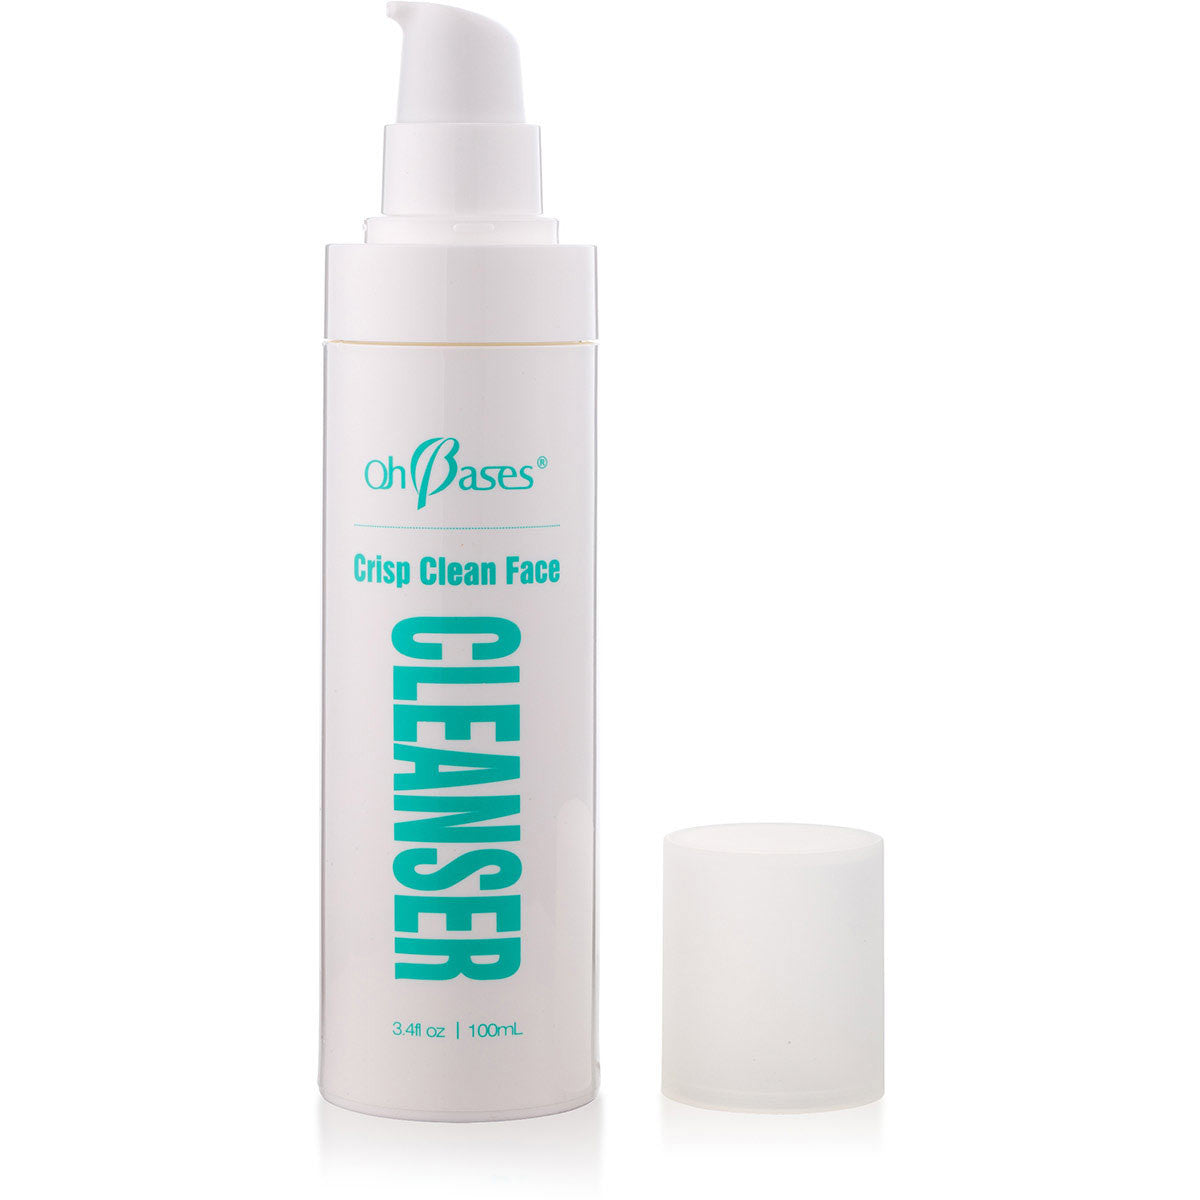 Crisp Clean Face Cleanser - OhBases